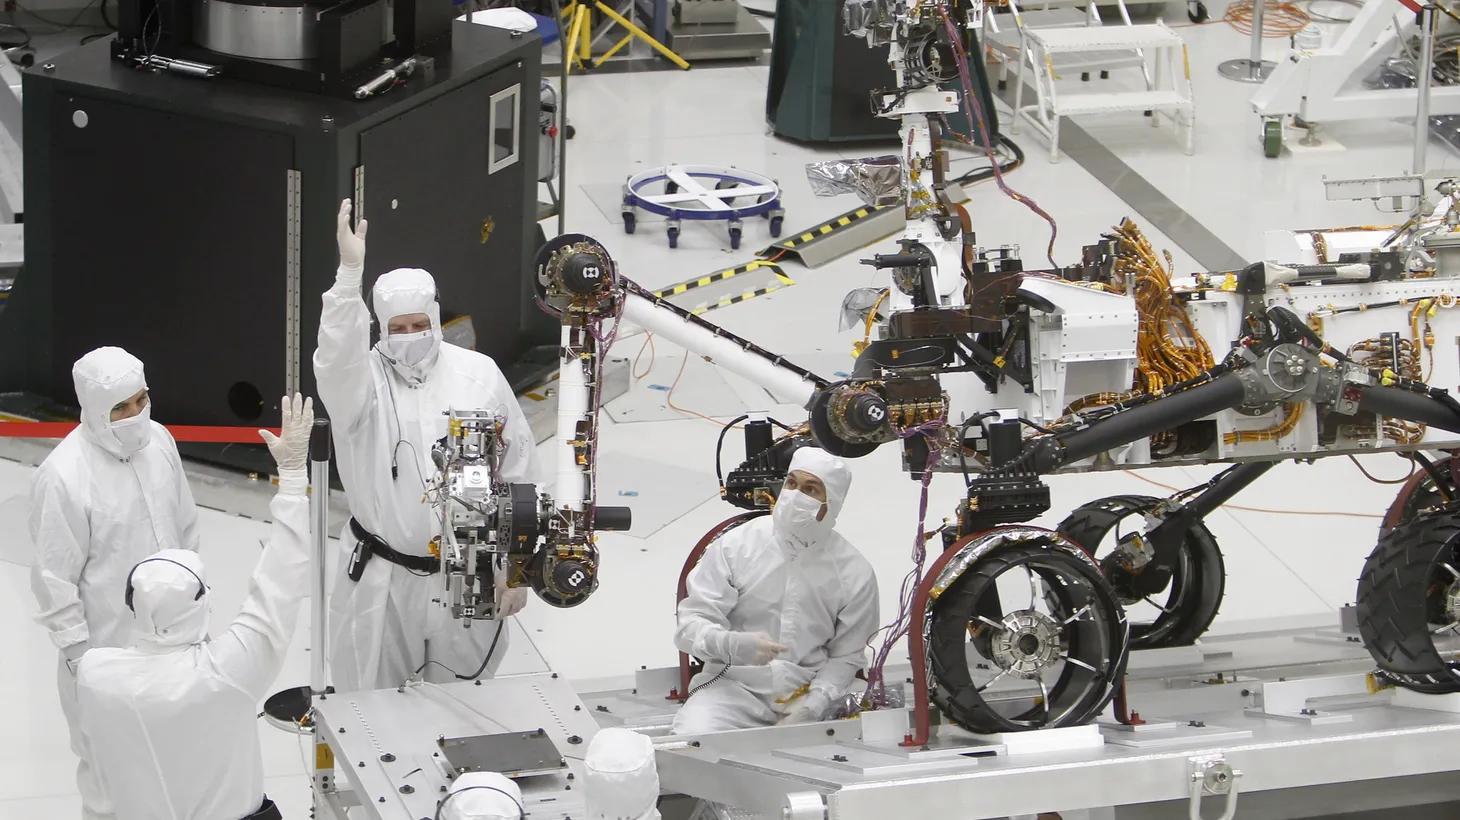 Technicians test the robotic arm of NASA's Mars Science Laboratory rover “Curiosity,” at the Jet Propulsion Laboratory in Pasadena, California, September 16, 2010.